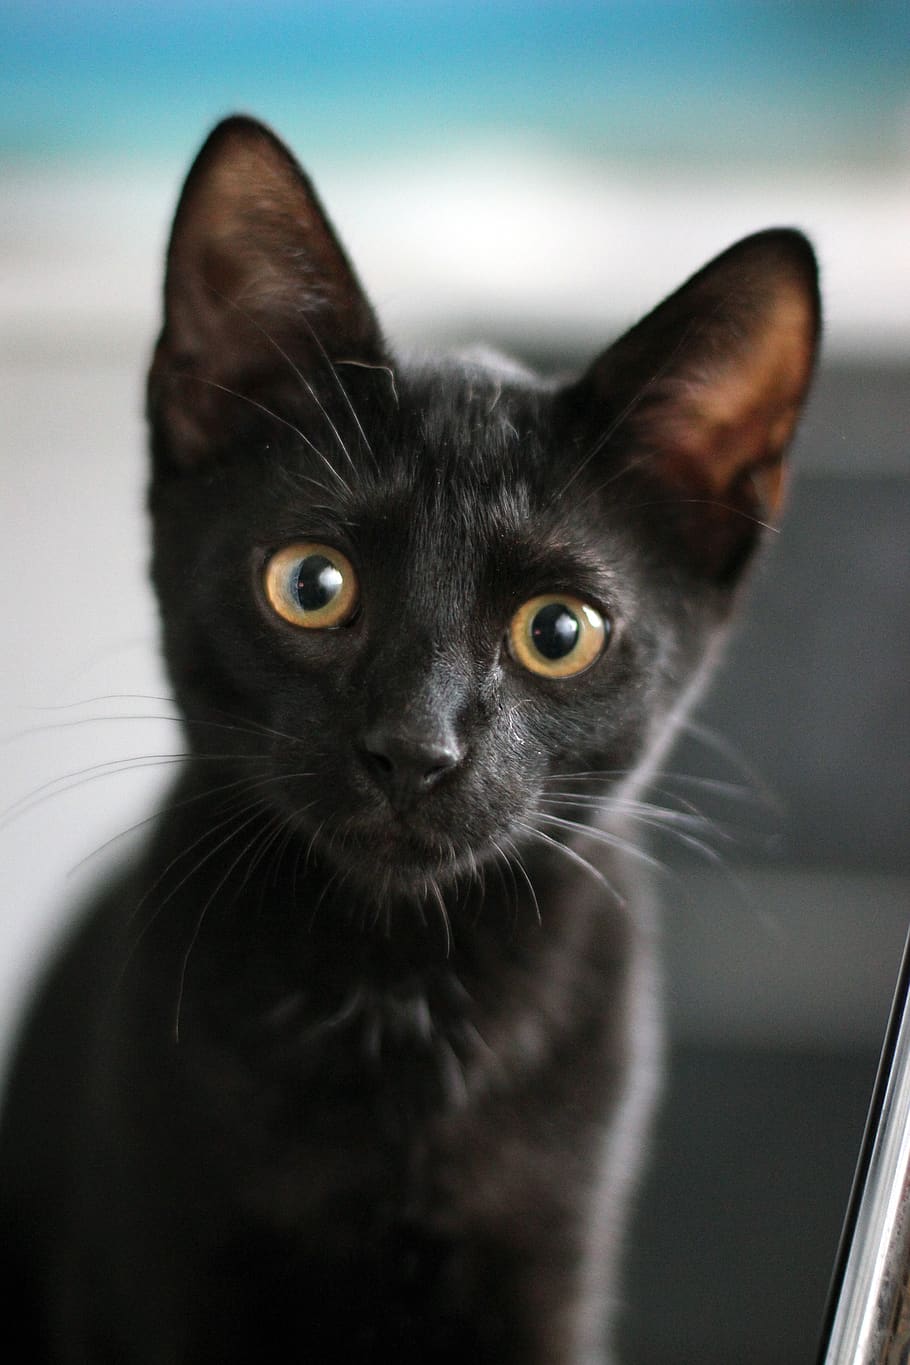 kucing hitam, anak kucing hitam, hewan, kucing, kucing penasaran, mata, hewan peliharaan, penasaran, anak kucing, kecil